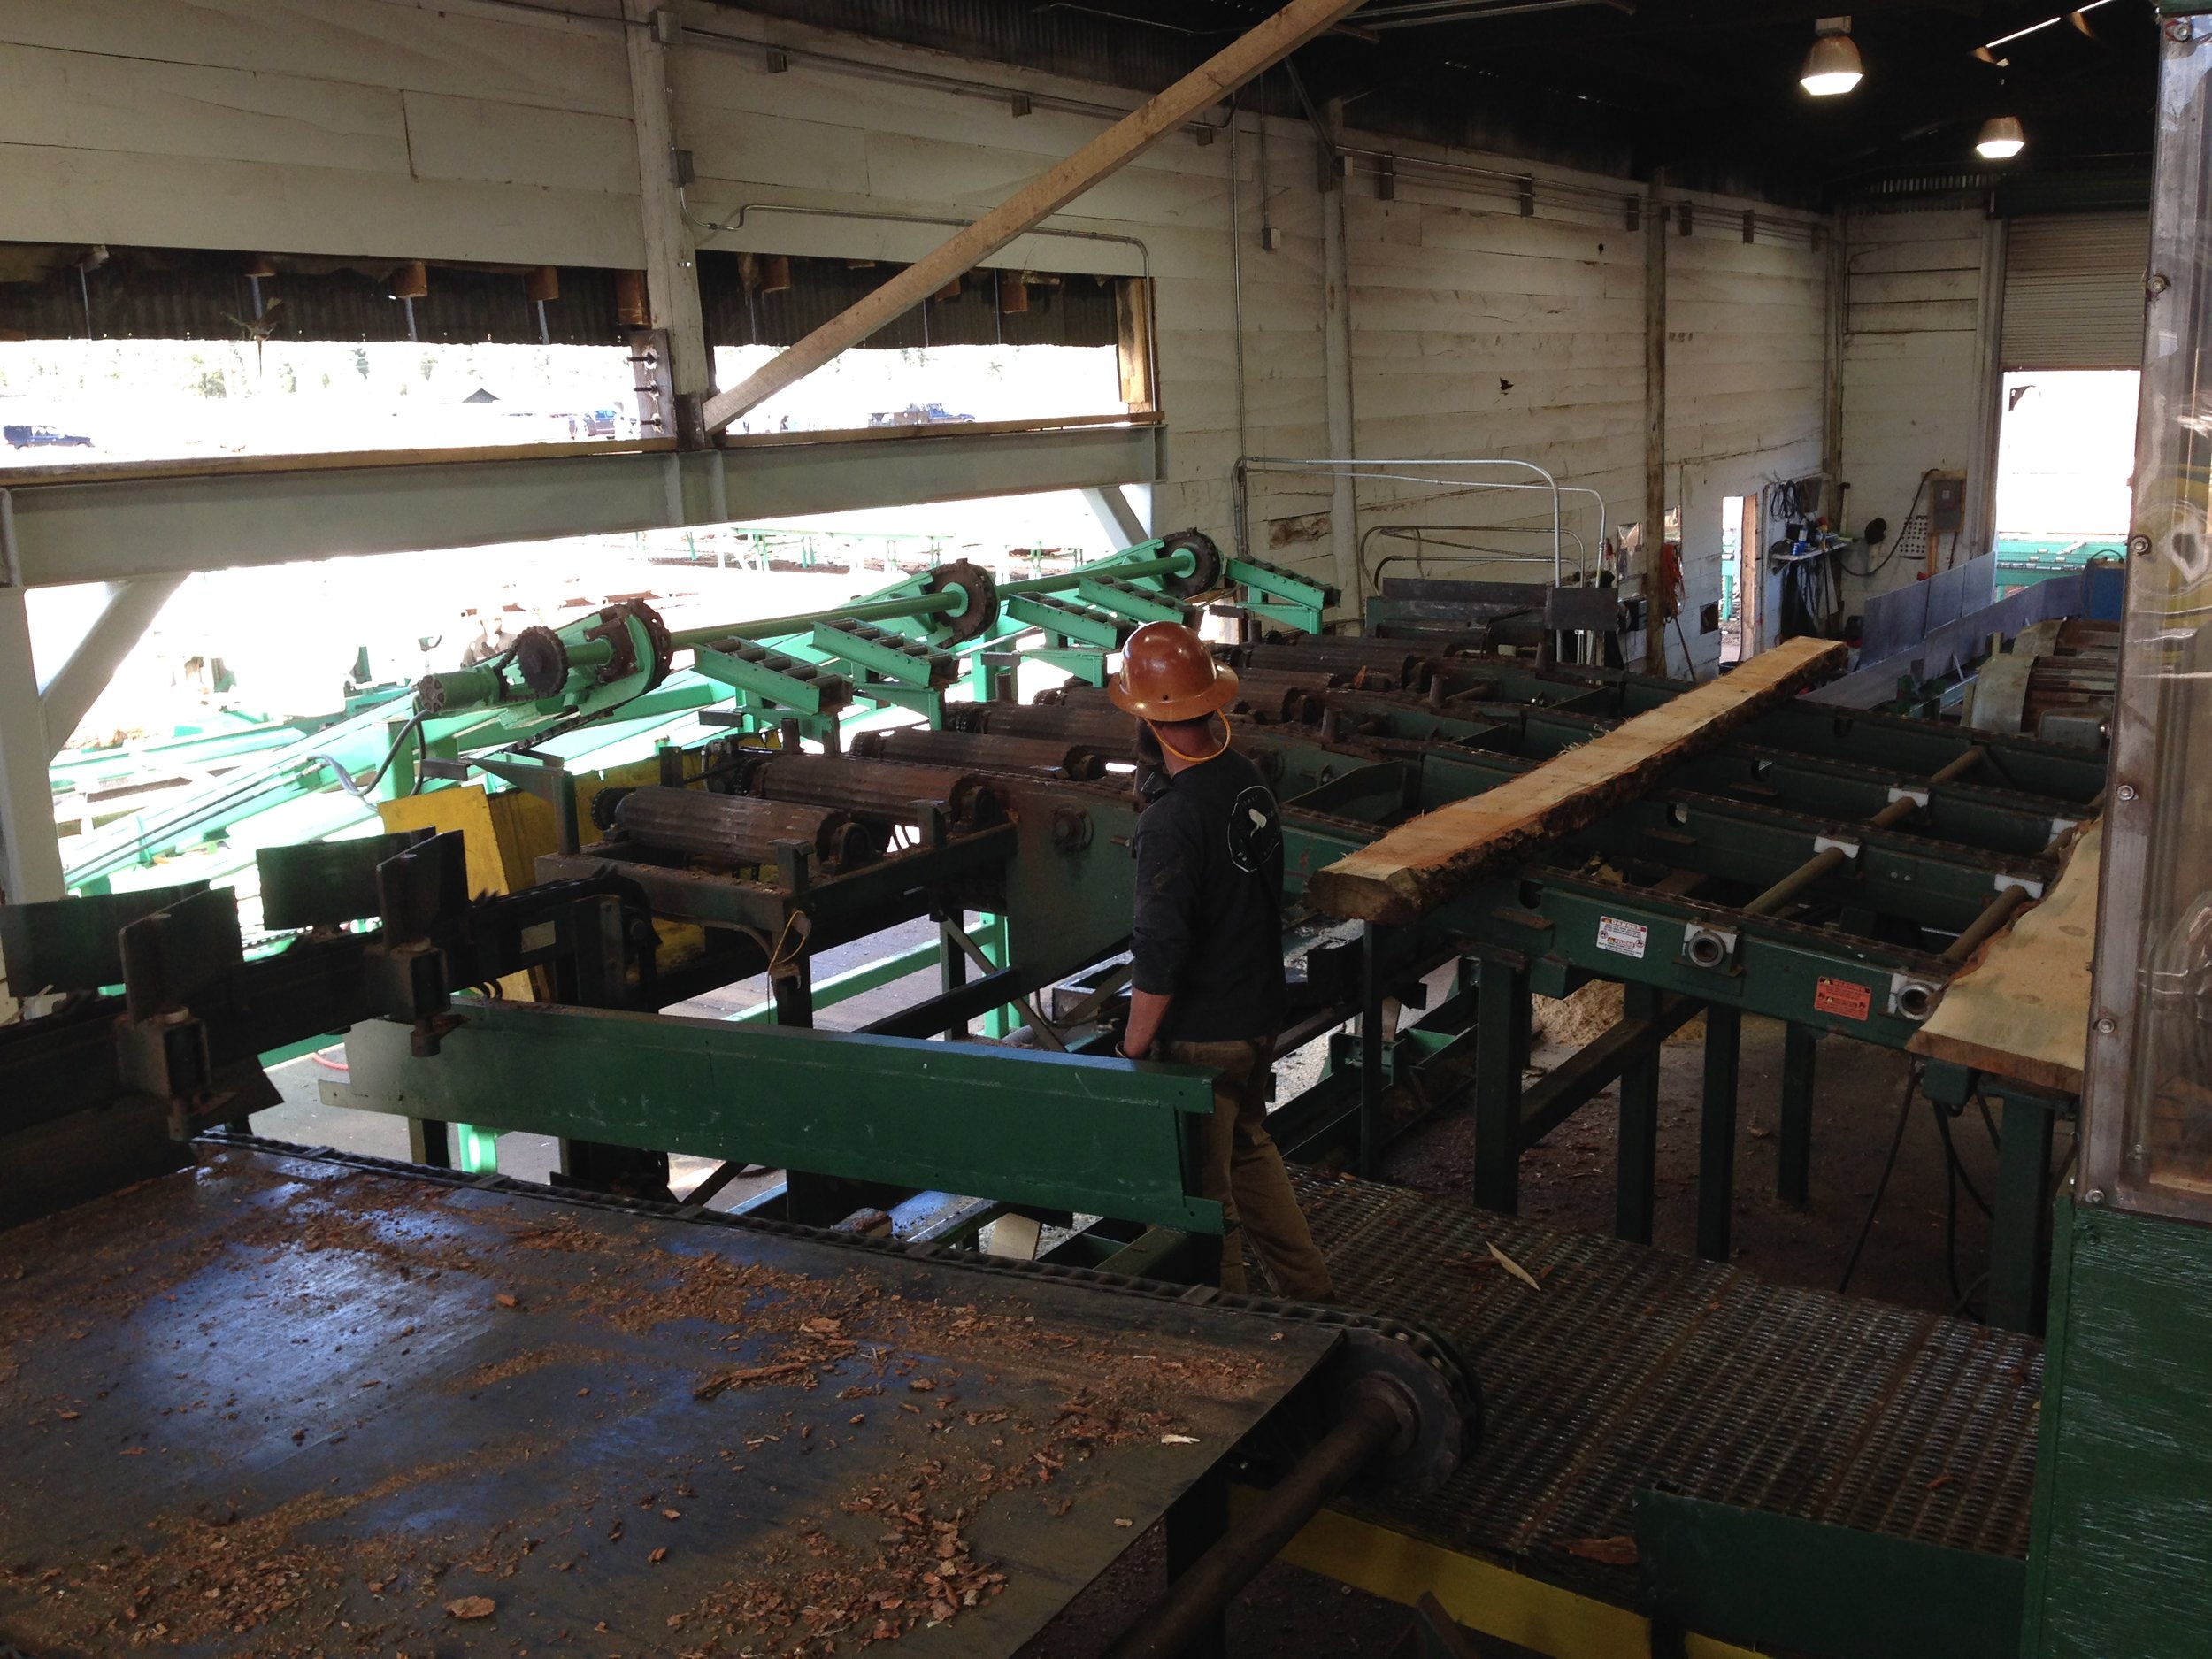  A view from inside the NewPac Fibre sawmill in Williams, AZ.&nbsp; 